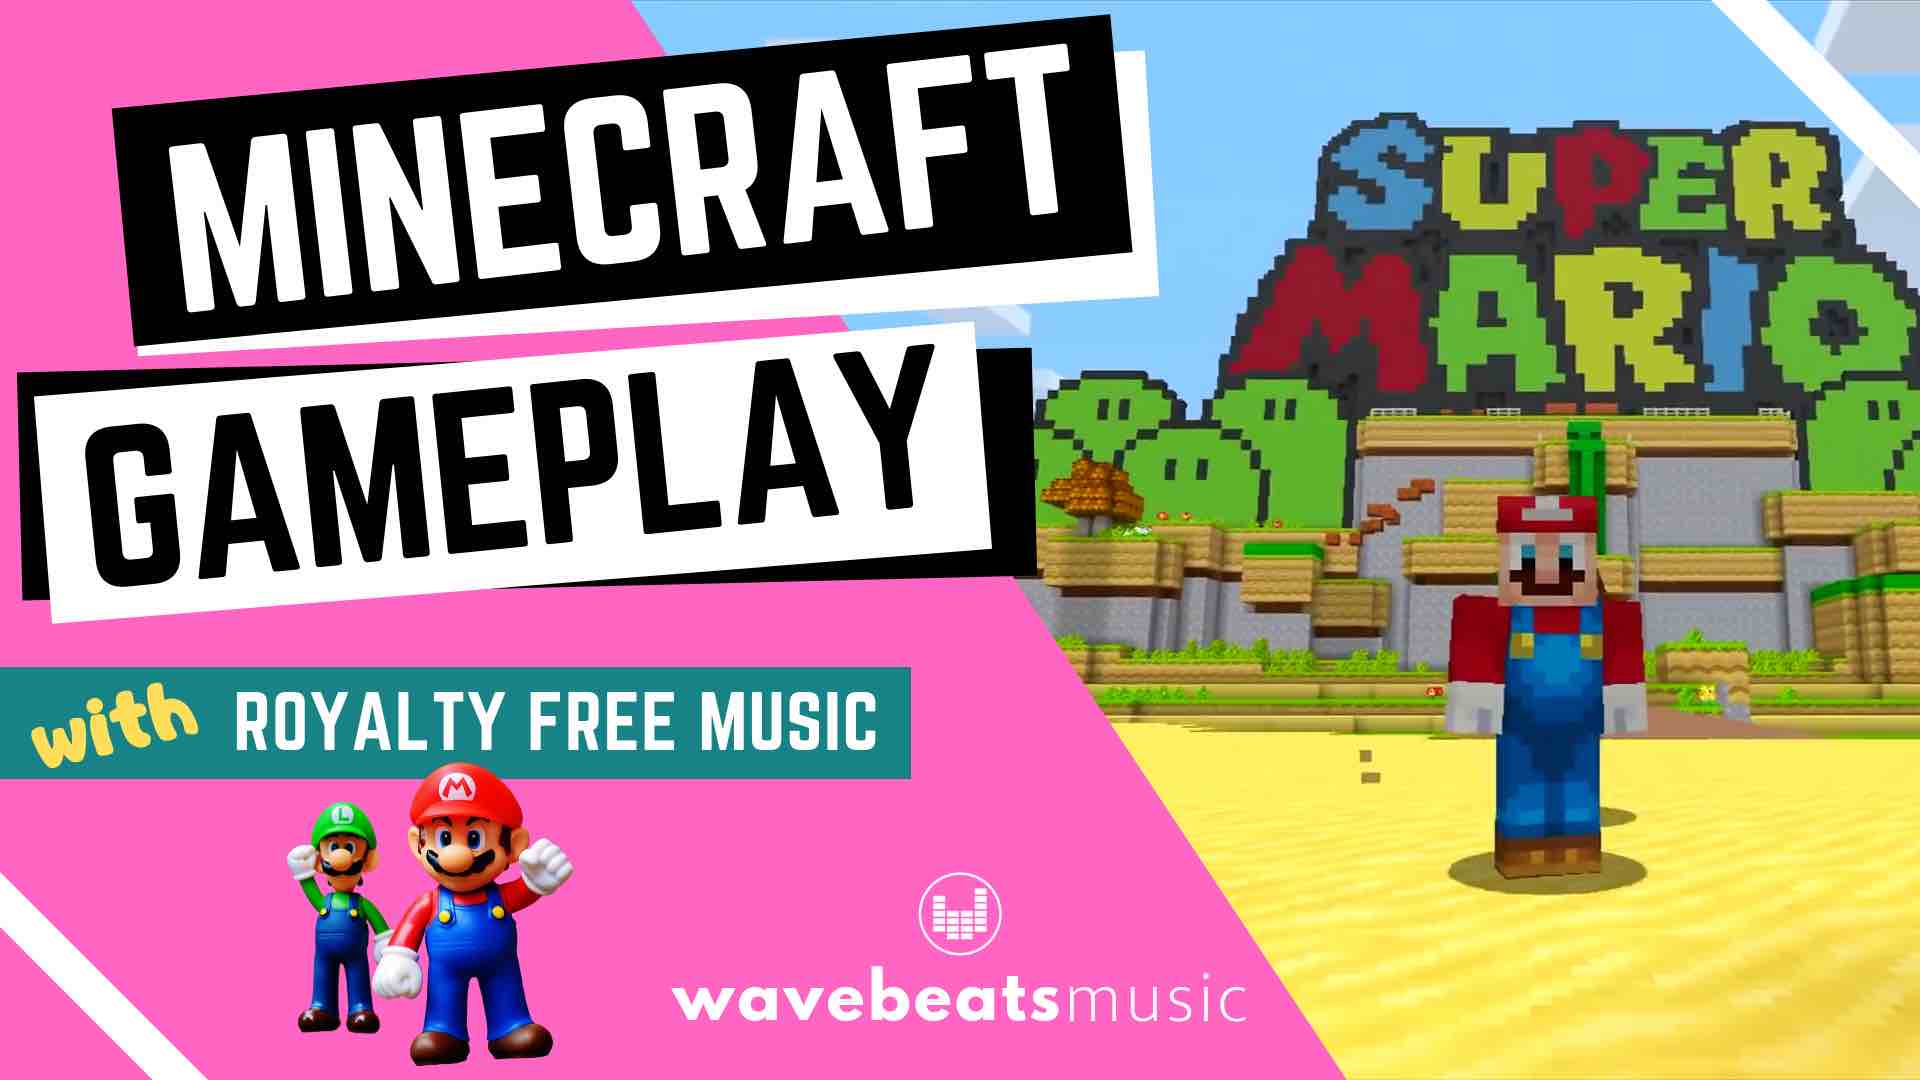 Video Game / Arcade Music (Royalty Free!) 